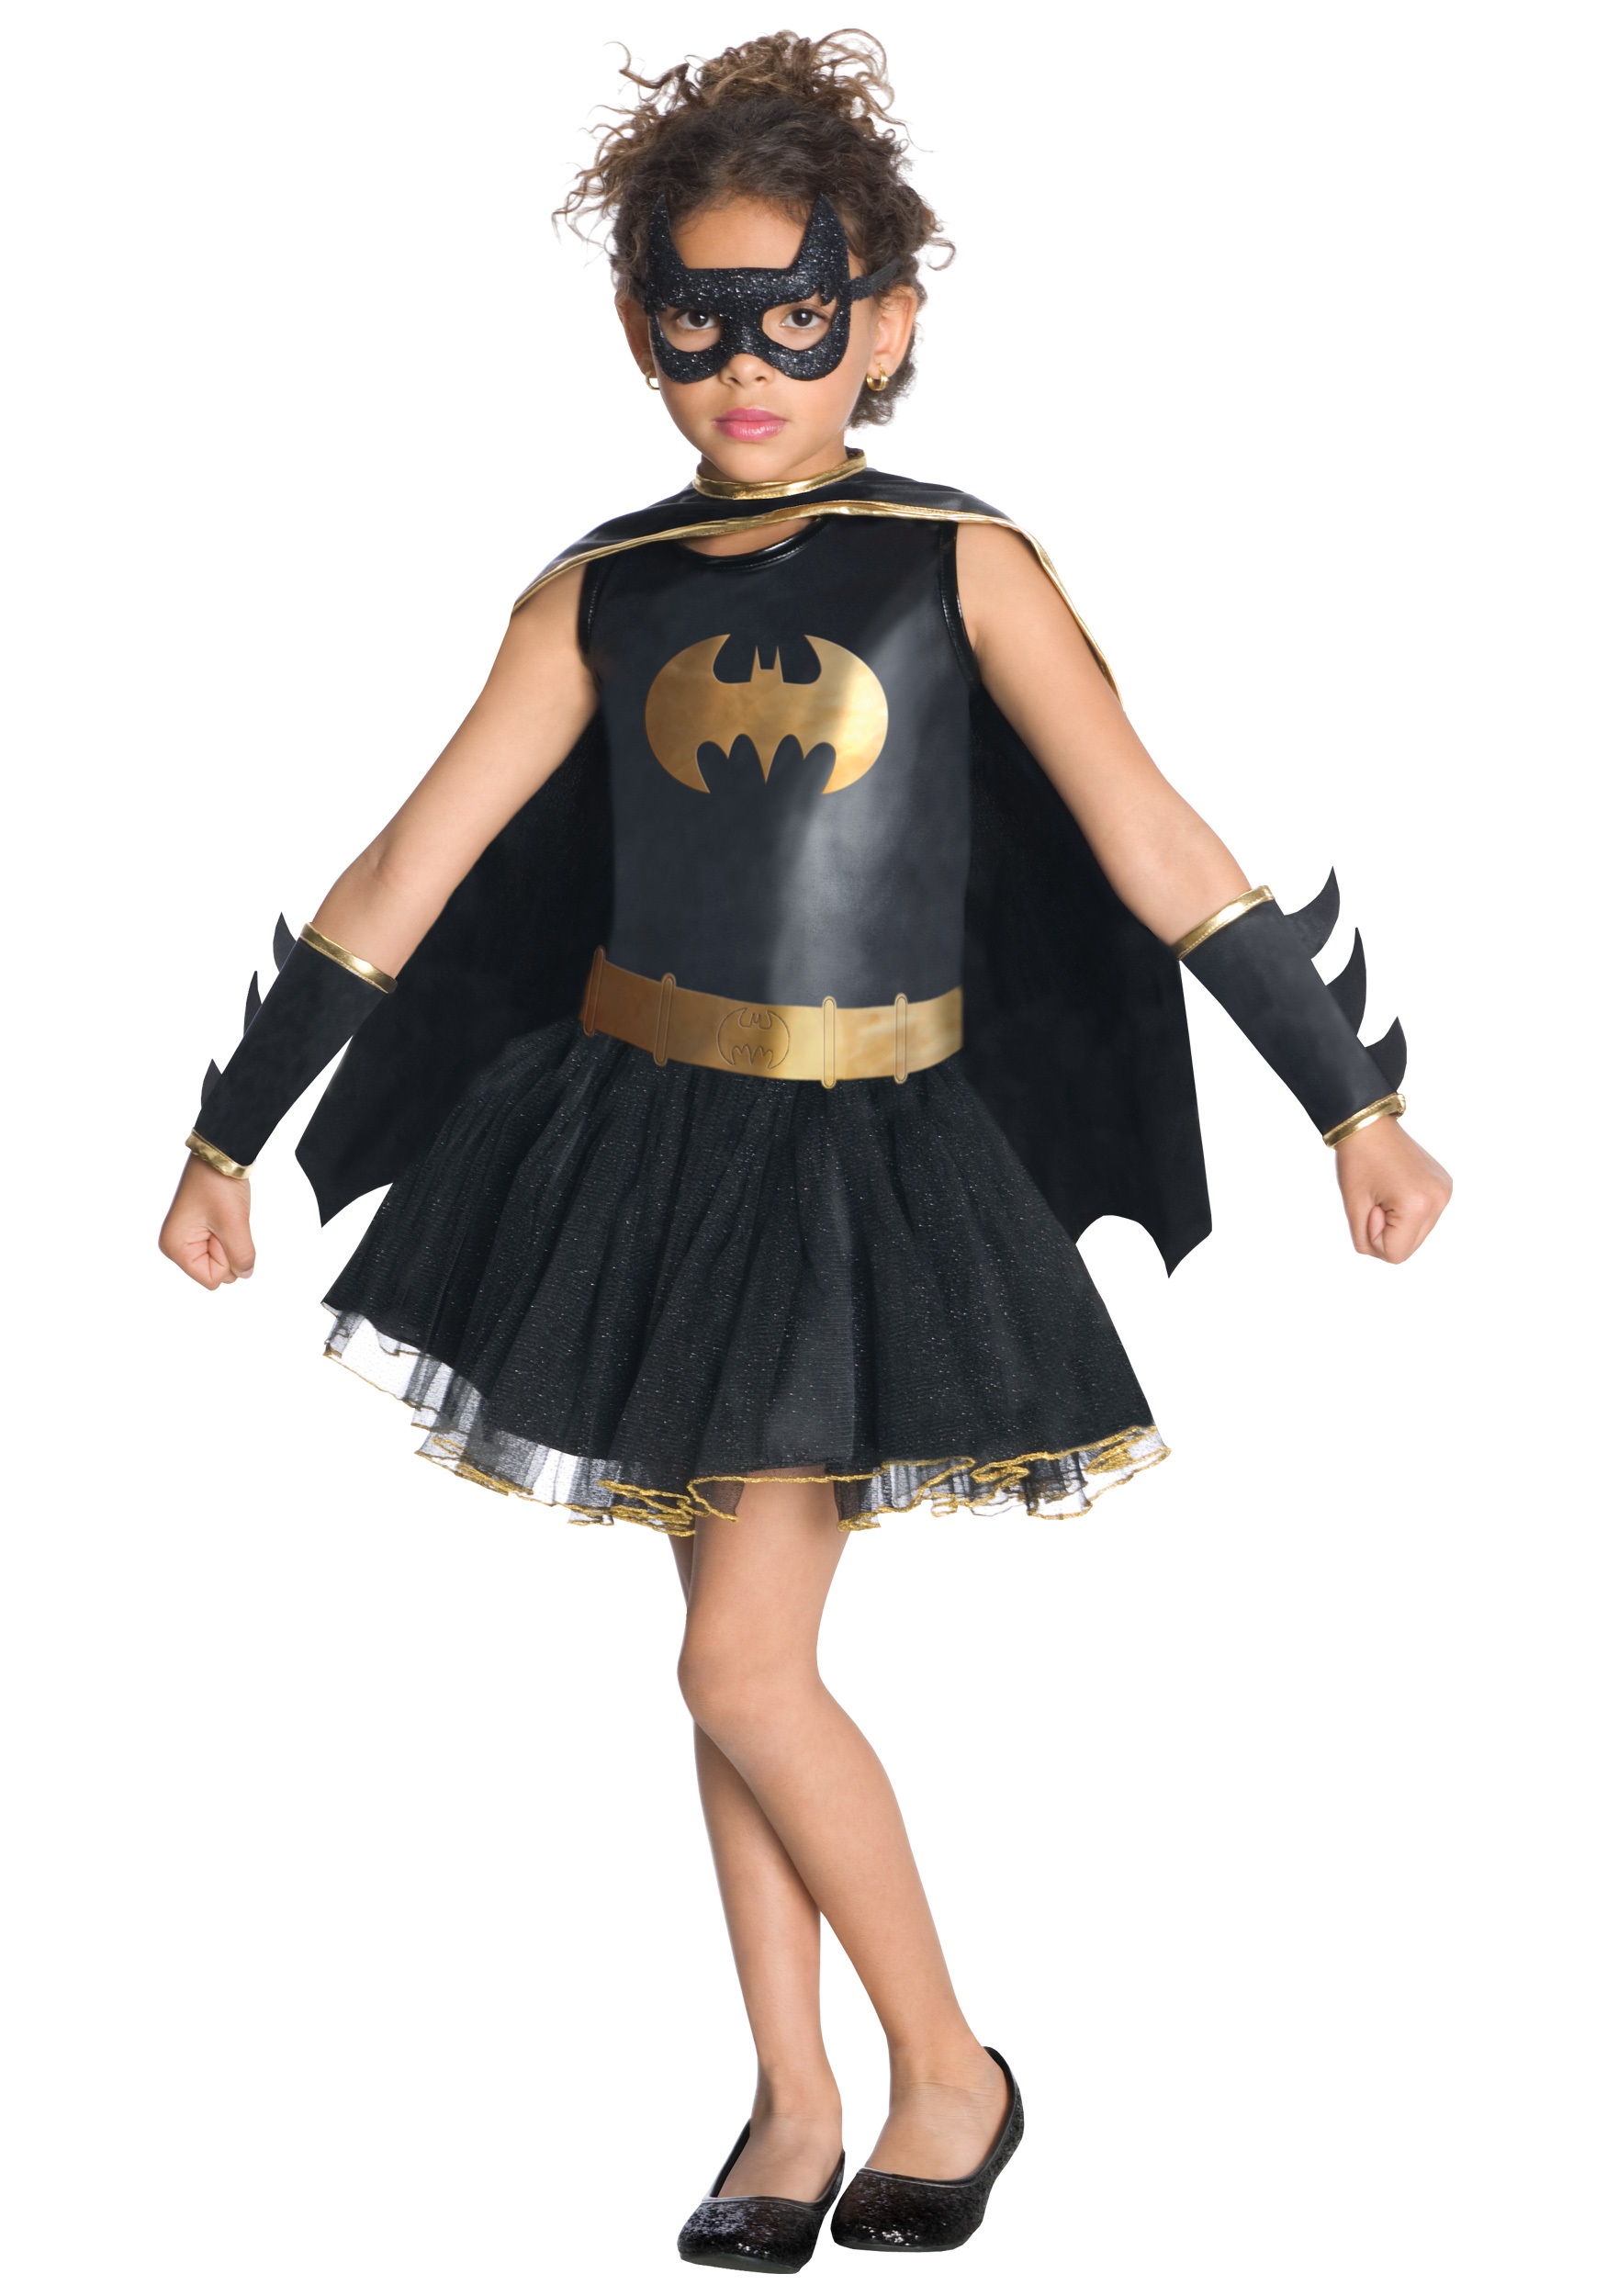 Photos - Fancy Dress Rubies Costume Co. Inc Superhero Batgirl Tutu Costume for Girls Black RU88 